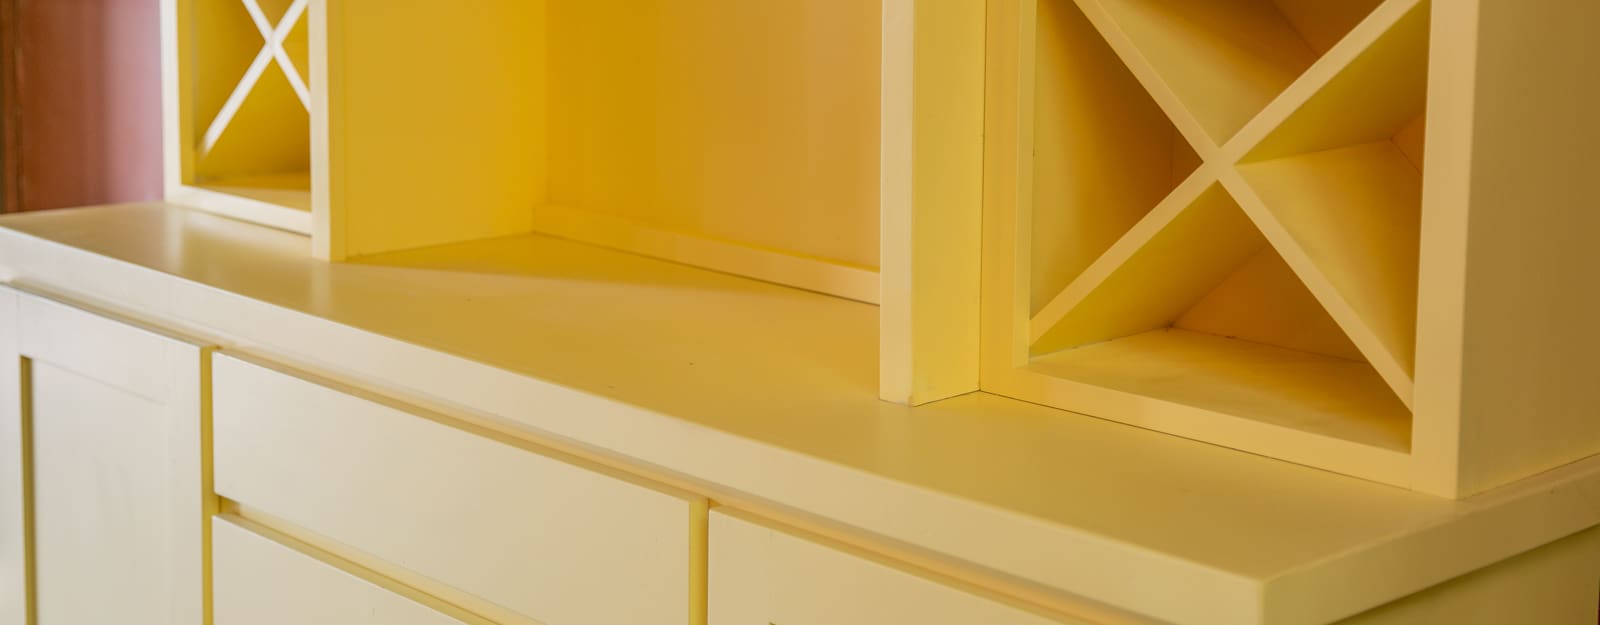 Yellow Cabinet Close